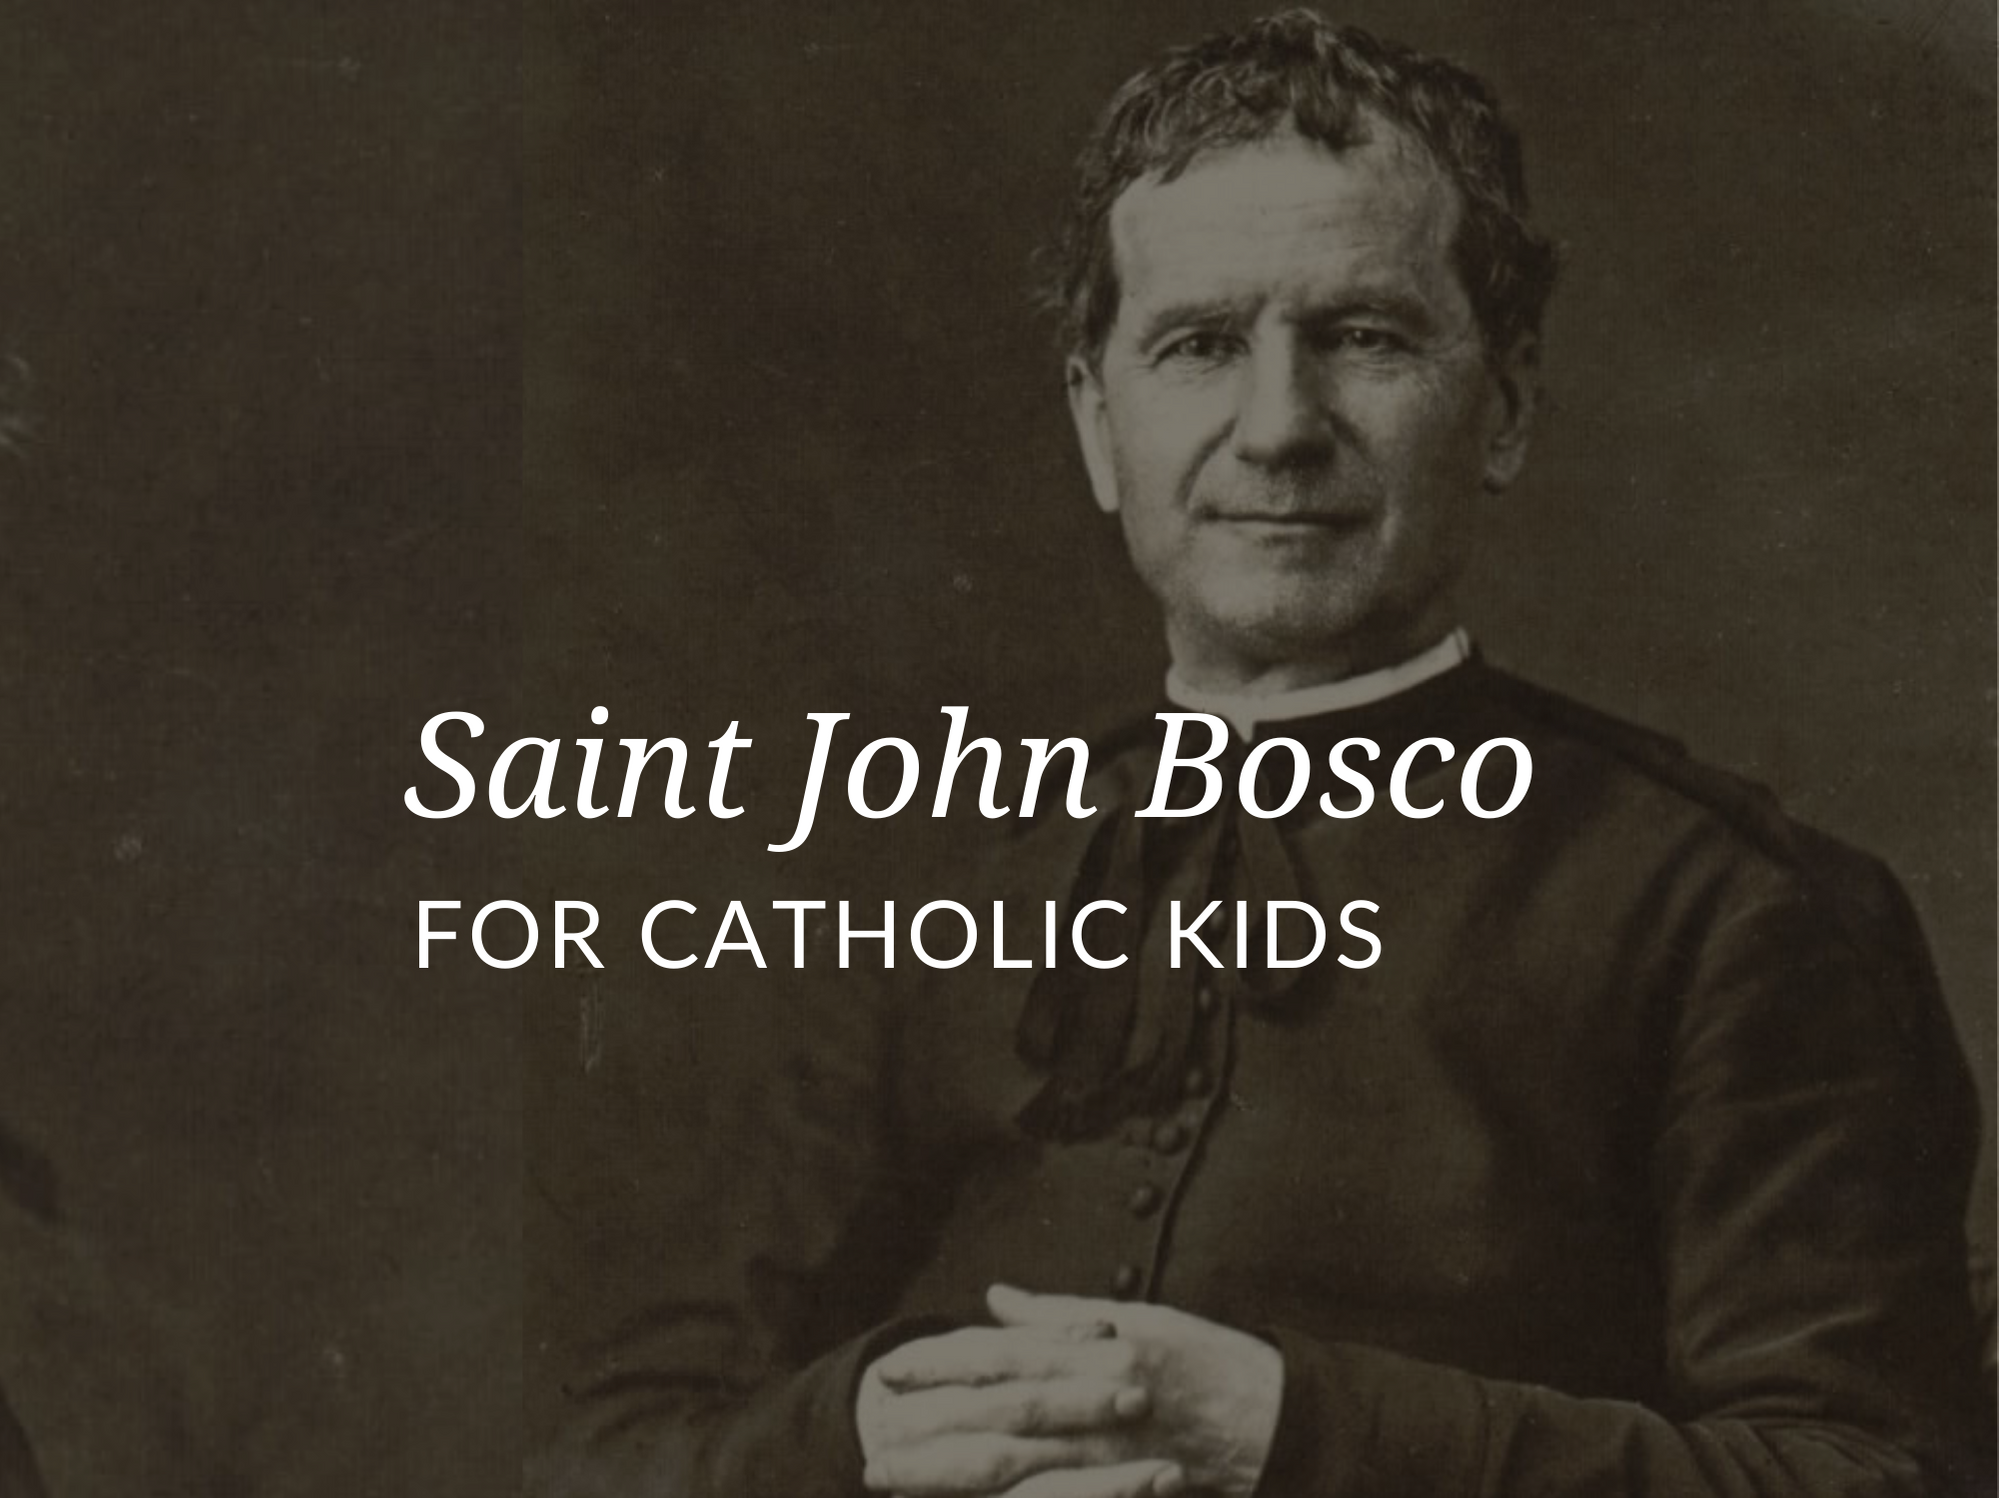 popular-saints-for-kids-saint-john-bosco Unspecified / Public domain